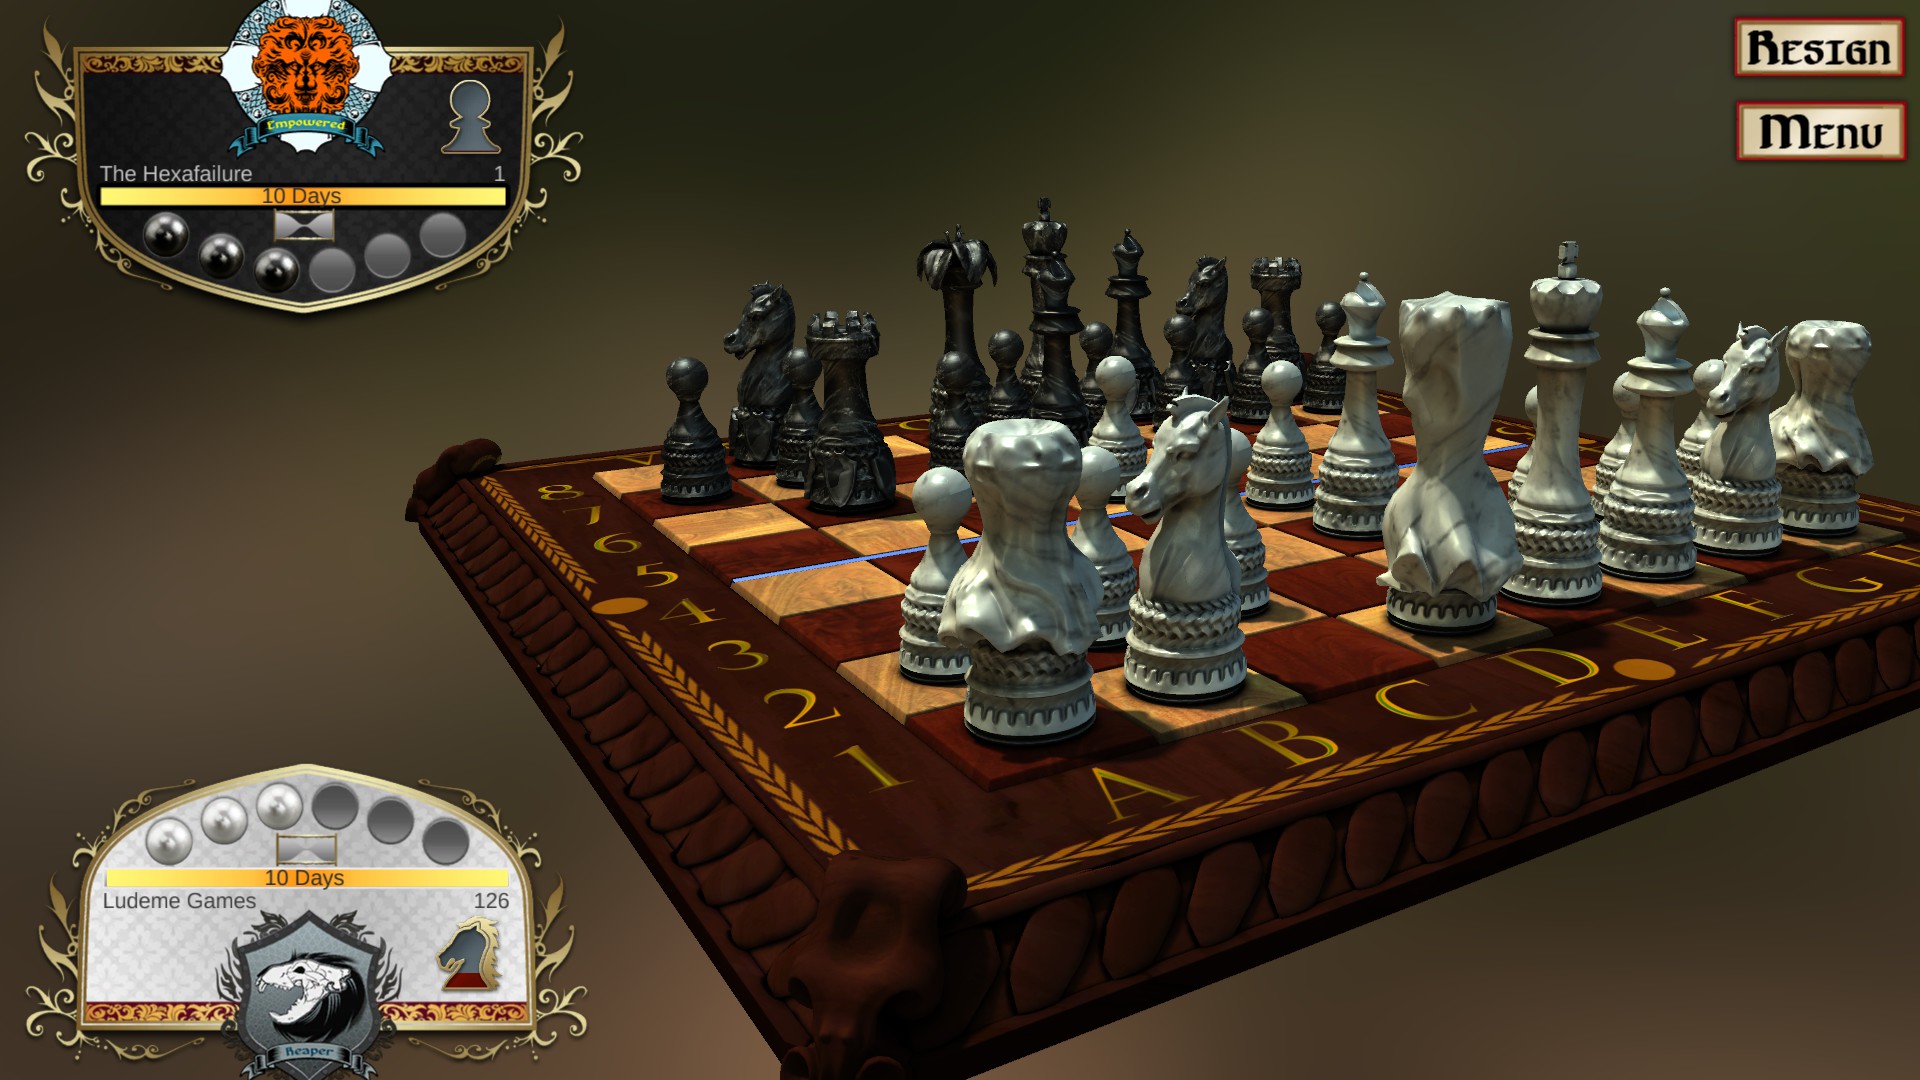 Шахматы играть без регистрации. Шахматы Чесс версия 2. Живые шахматы игра Chess 2. Необычные шахматы на ПК. Игра про шахматы с сюжетом.